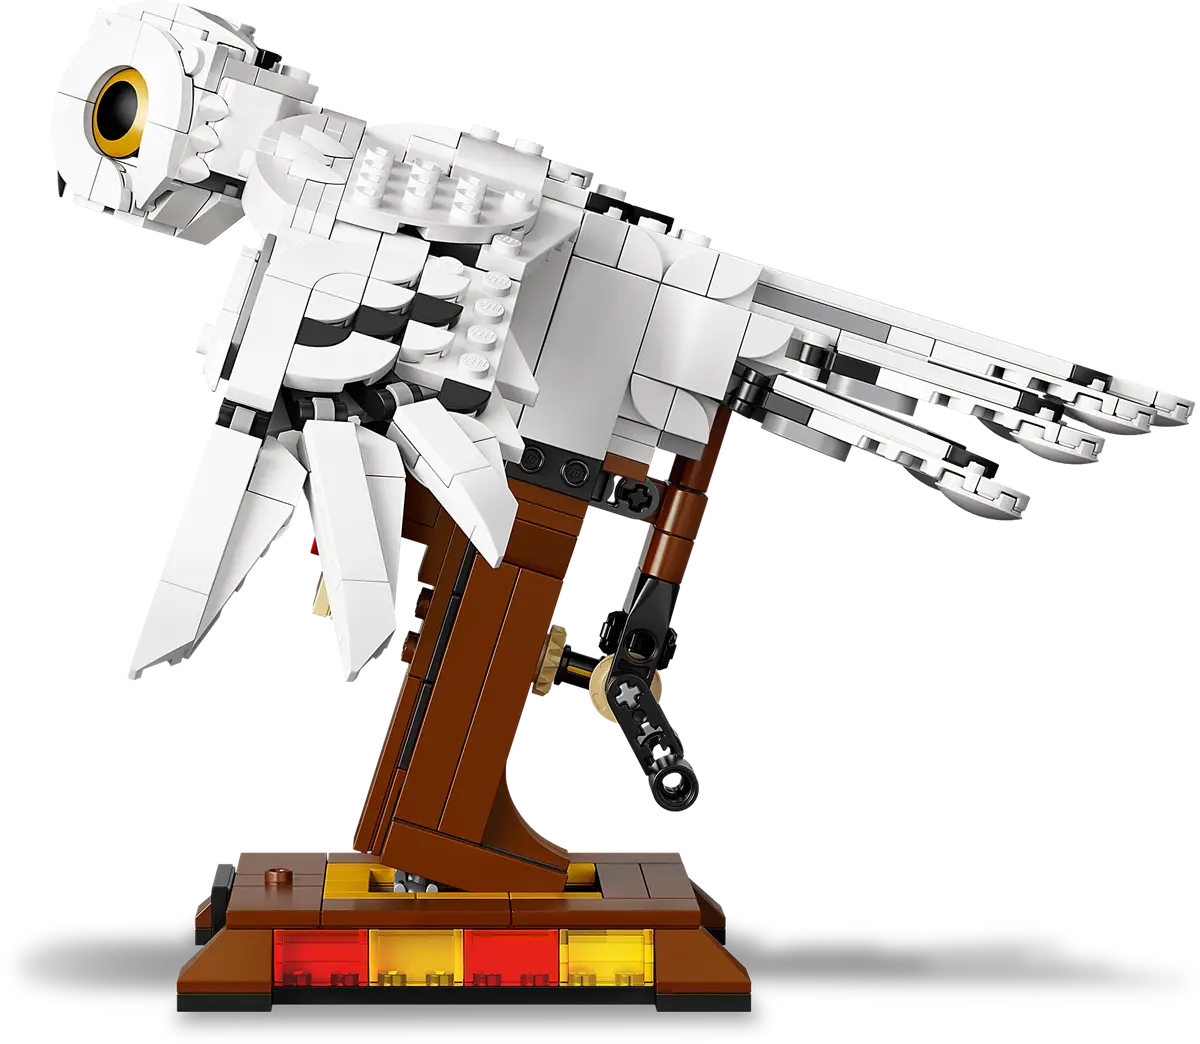 LEGO - Harry Potter - Hedwig™ - 75979